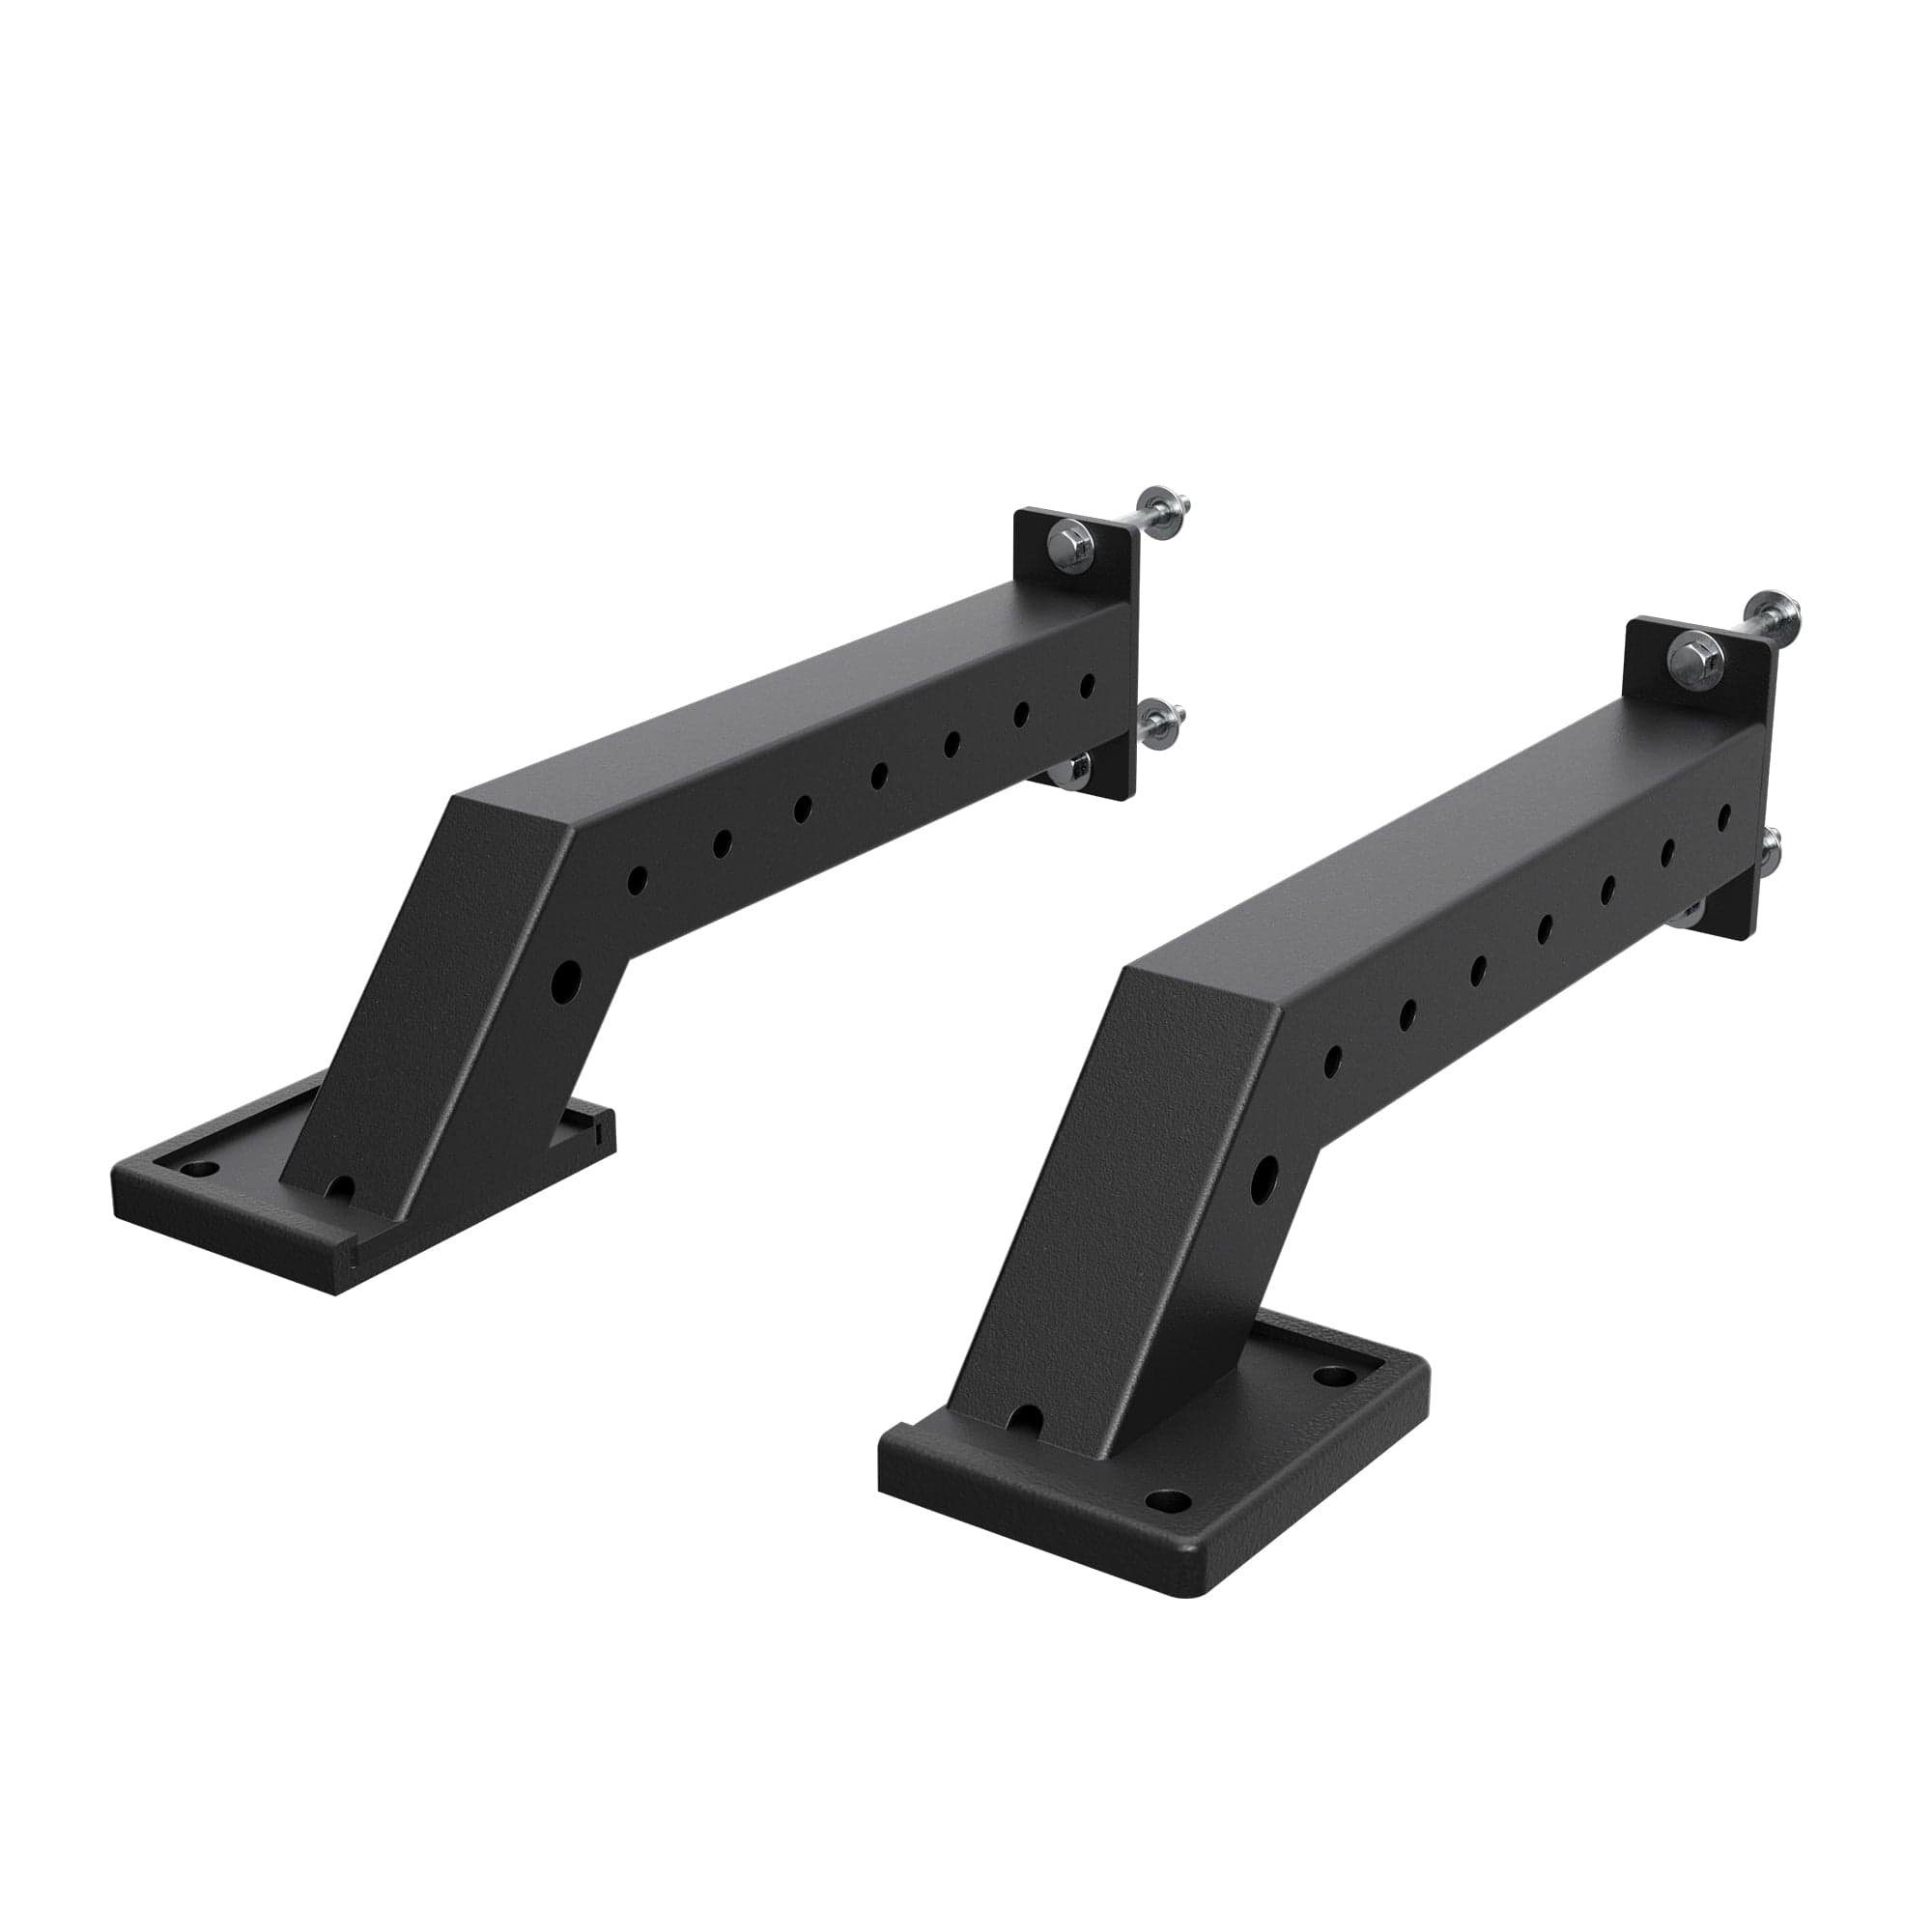 ATLETICA Power Rack R8 Front-Foot Stabilisatoren, Paarweise, 60,8 cm Länge | Power Racks